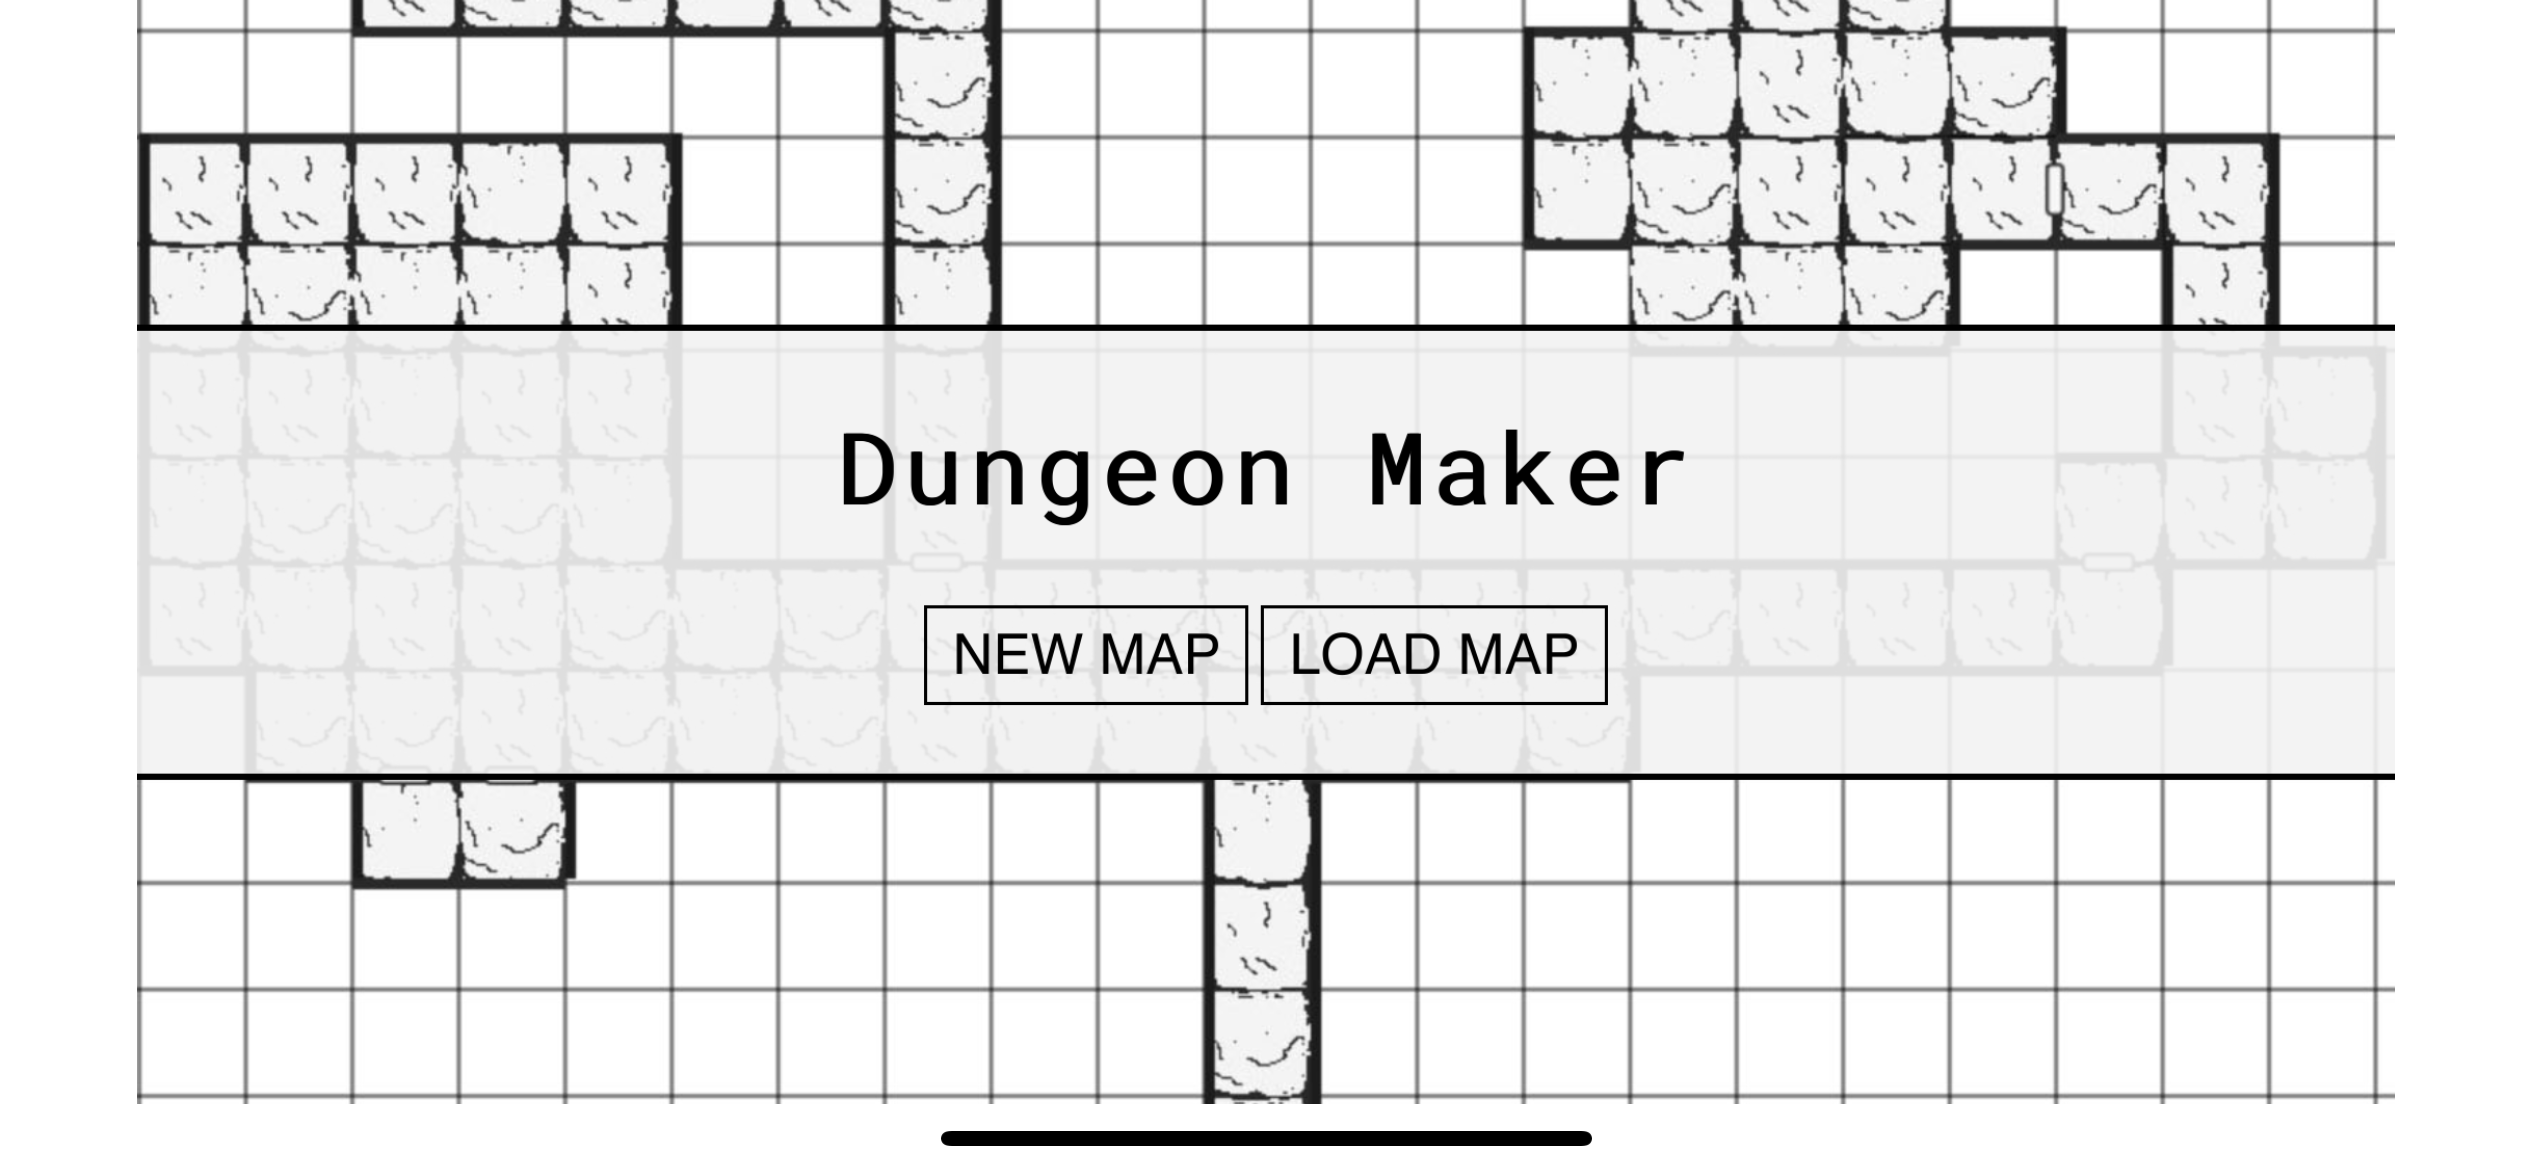 Dungeon Maker - Main Image